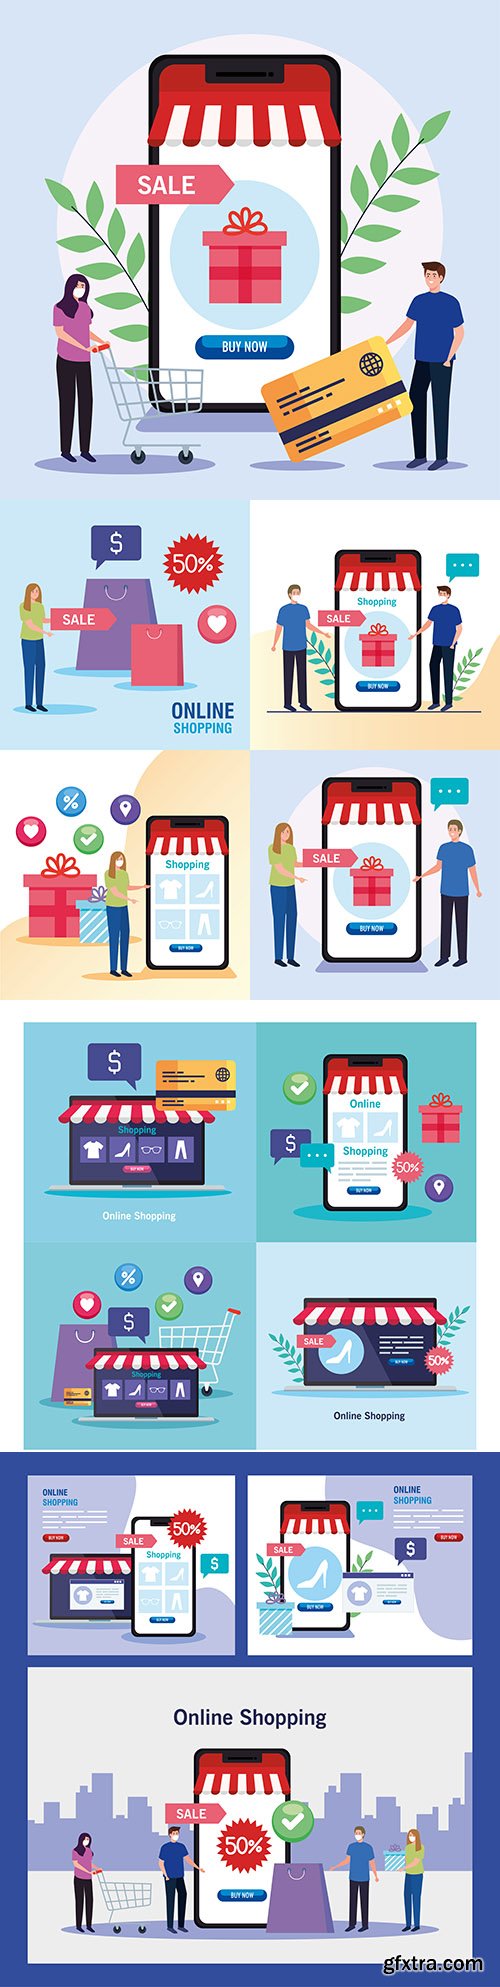 Shopping online e-commerce market and retail illustration